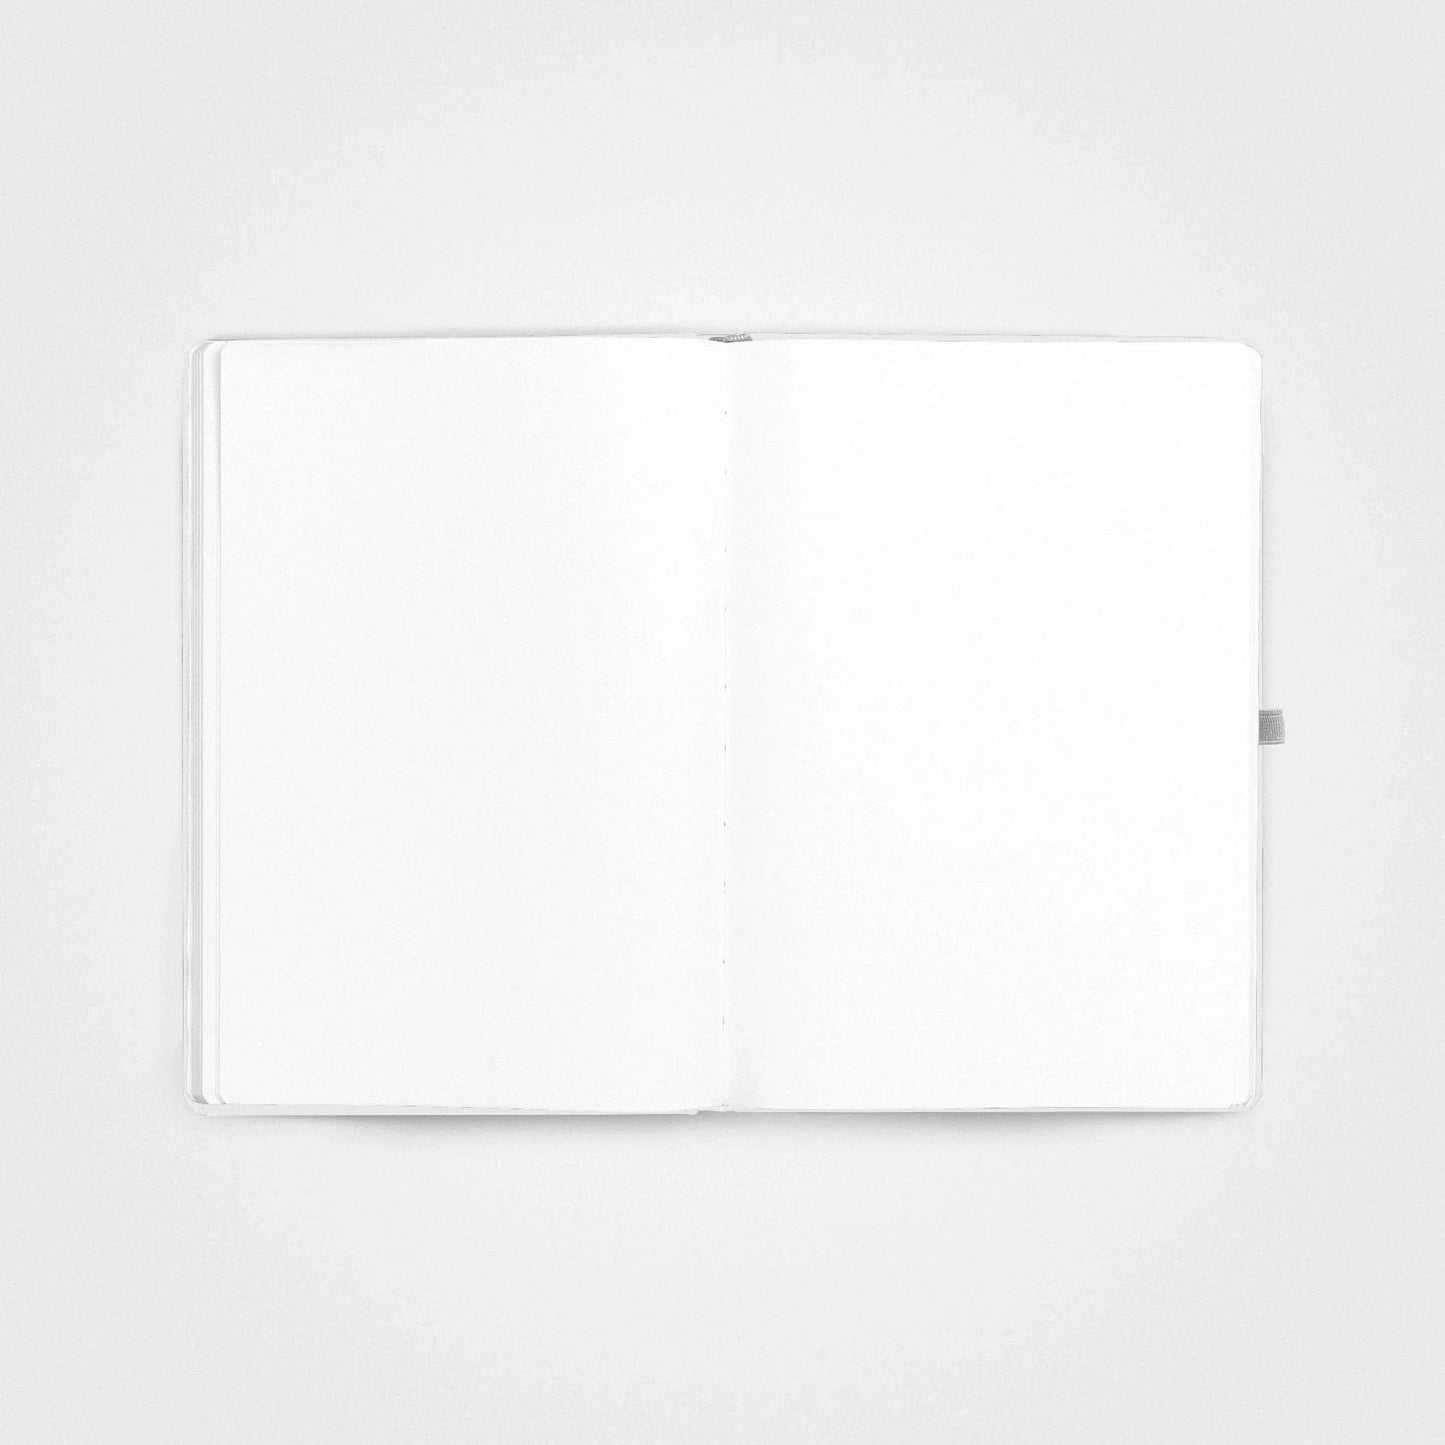 Steenpapier notebook - A5 Hardcover, Snow white